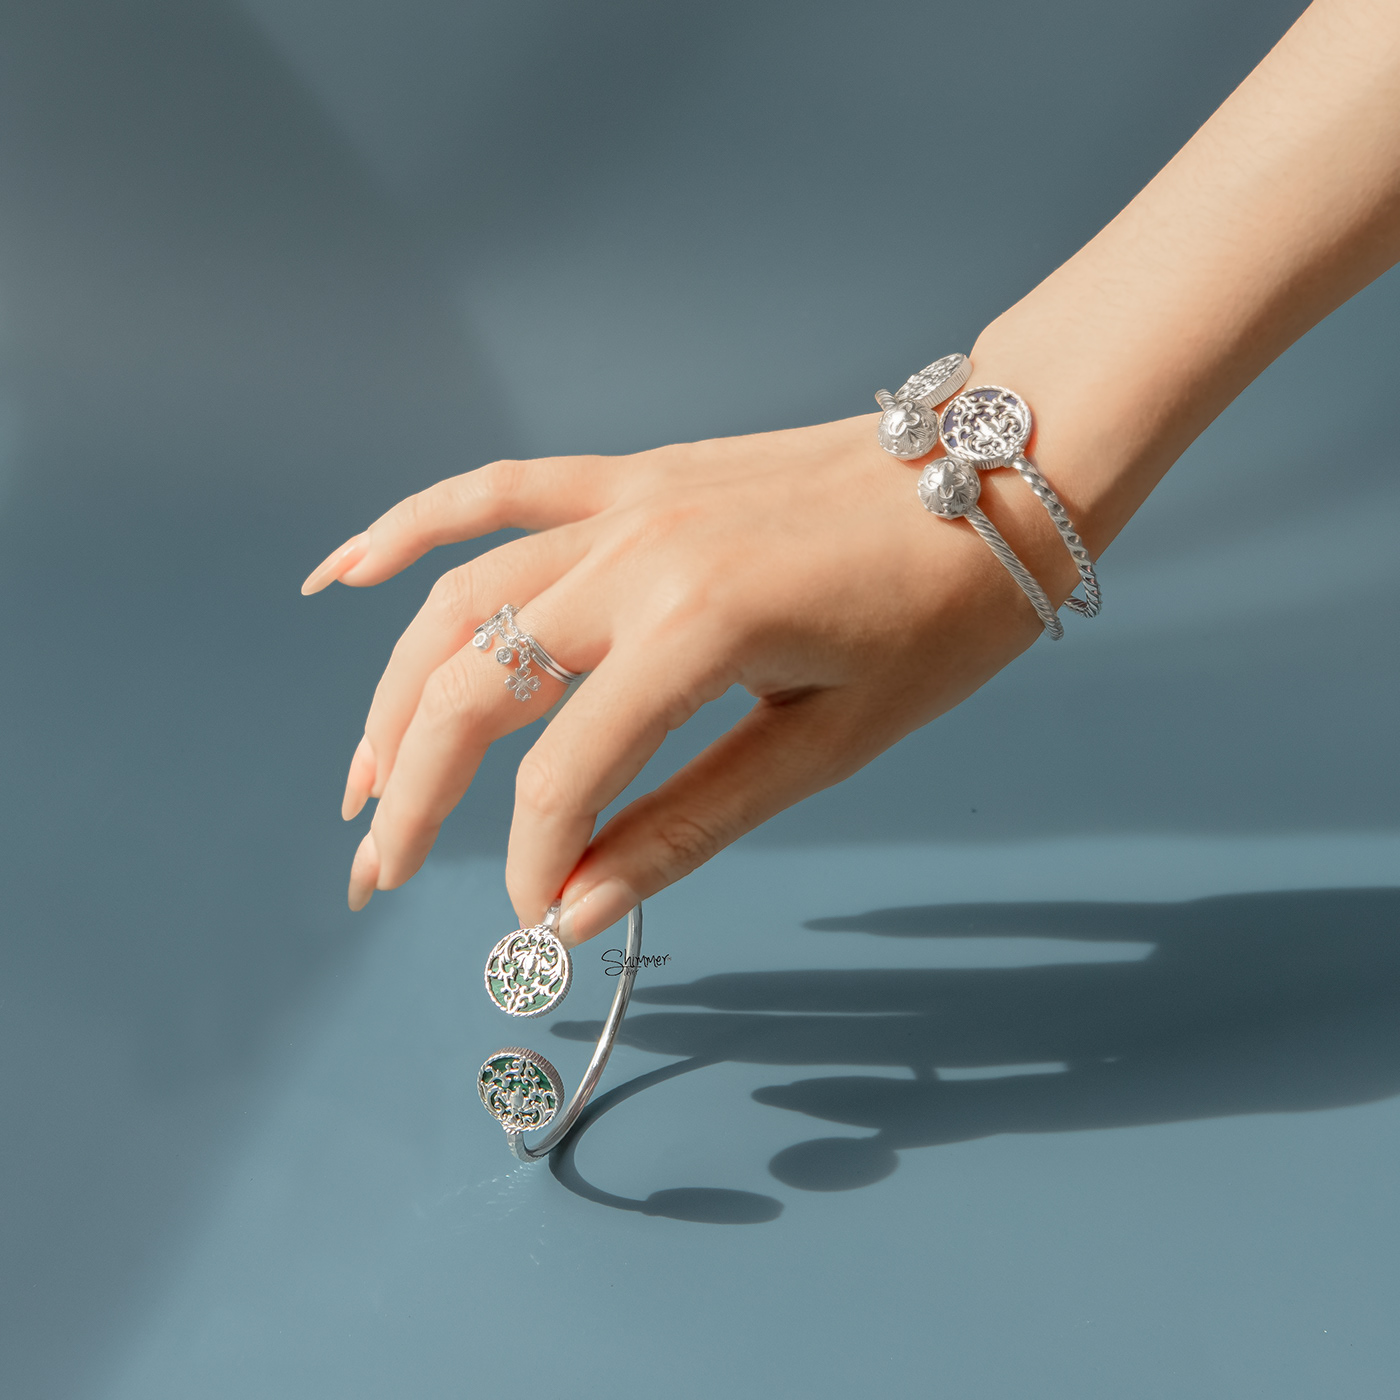 signature vietnam saigon jewelry Fashion  design Social media post Graphic Designer Handmade Jewelry photo jewelry